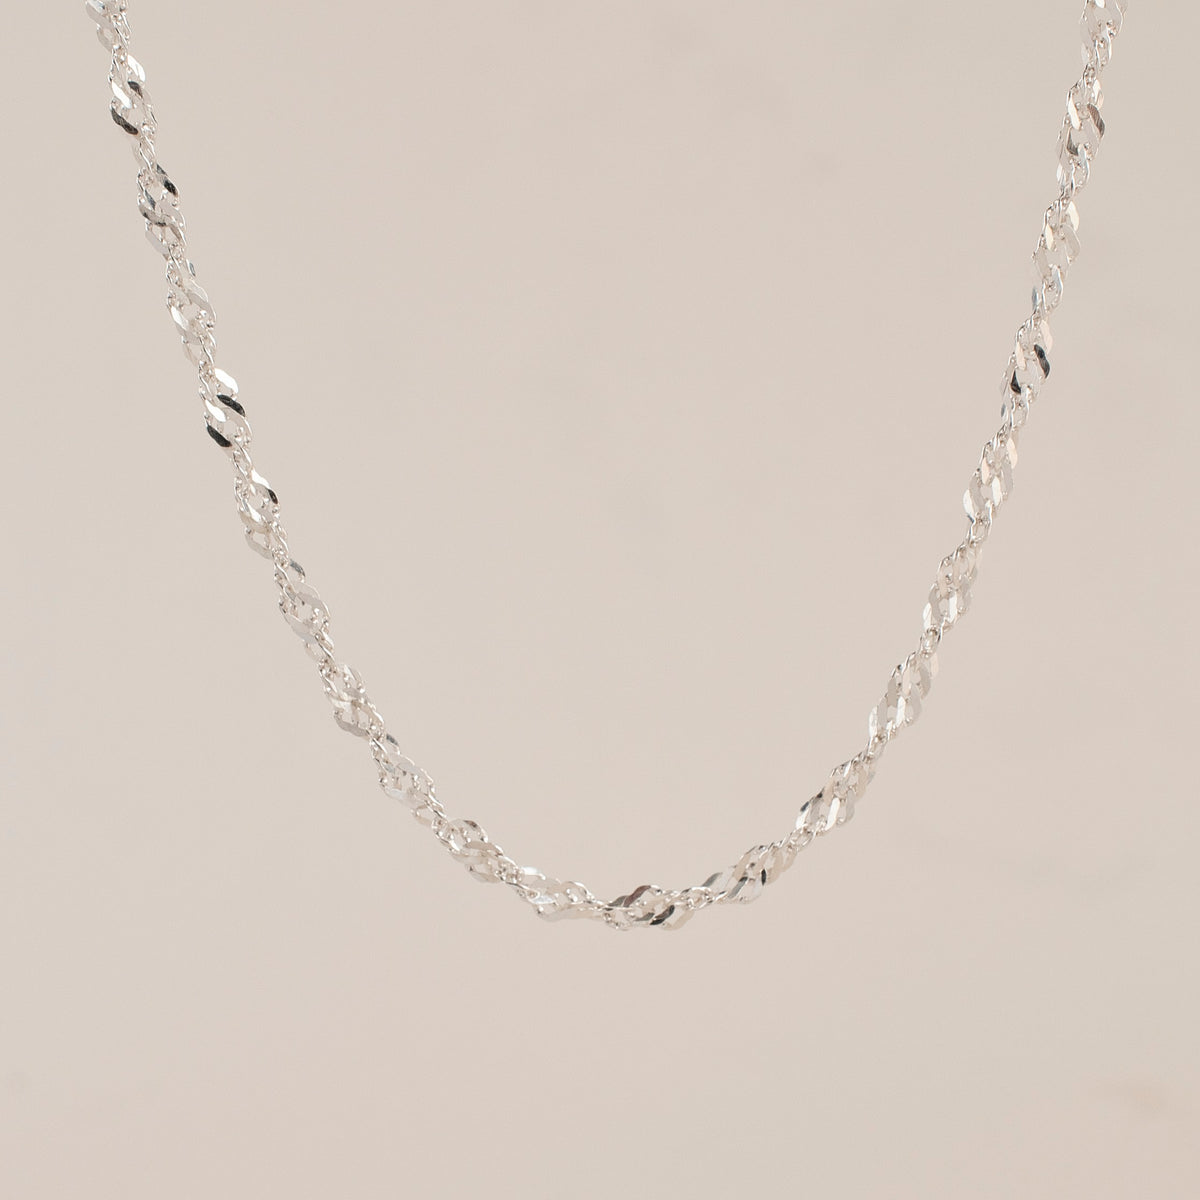 Spiral Chain Necklace 925 Silver